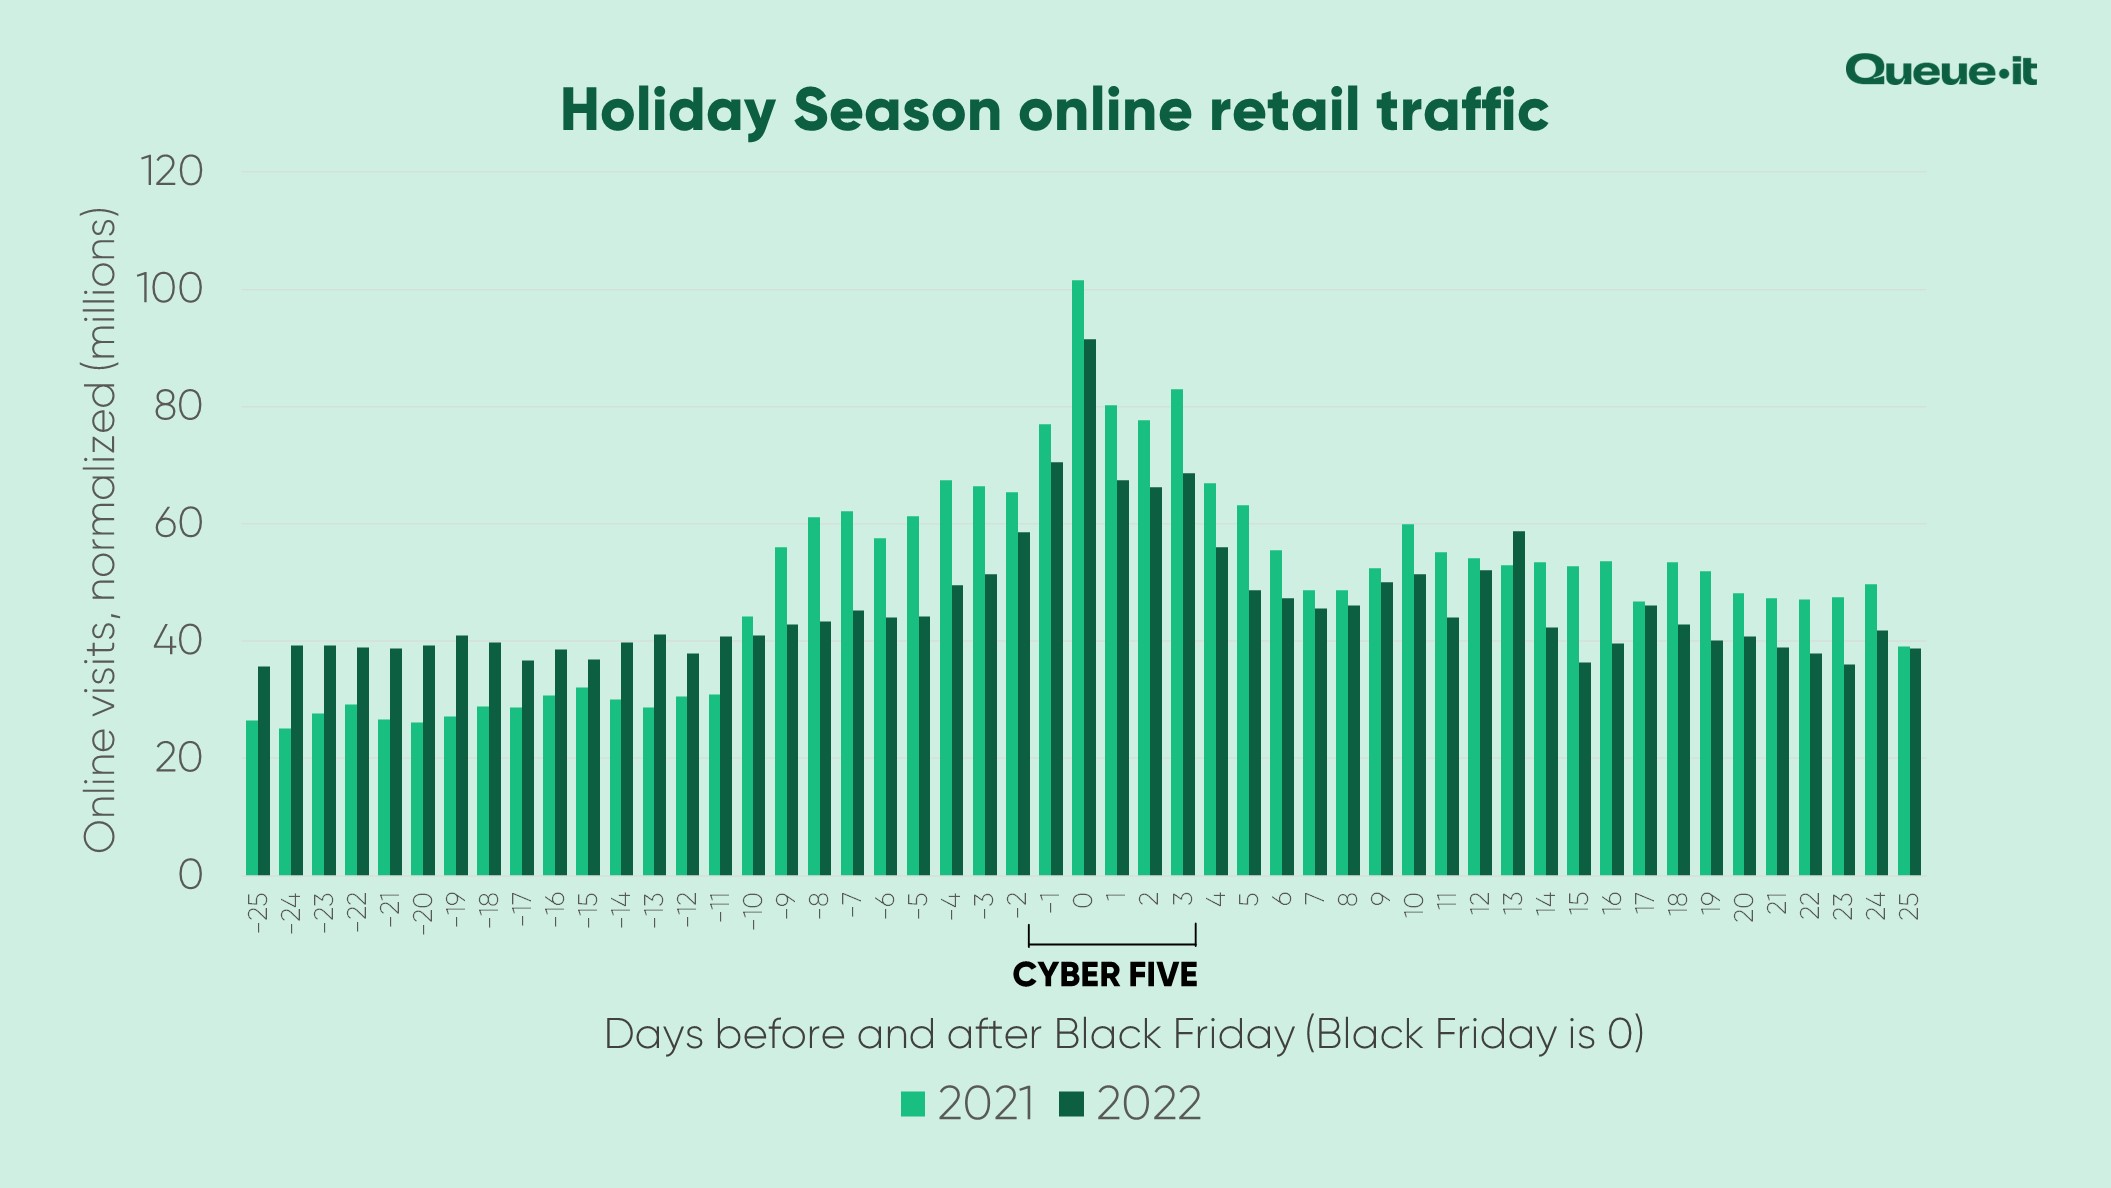 Online retail traffic in 2022 versus 2021 by day